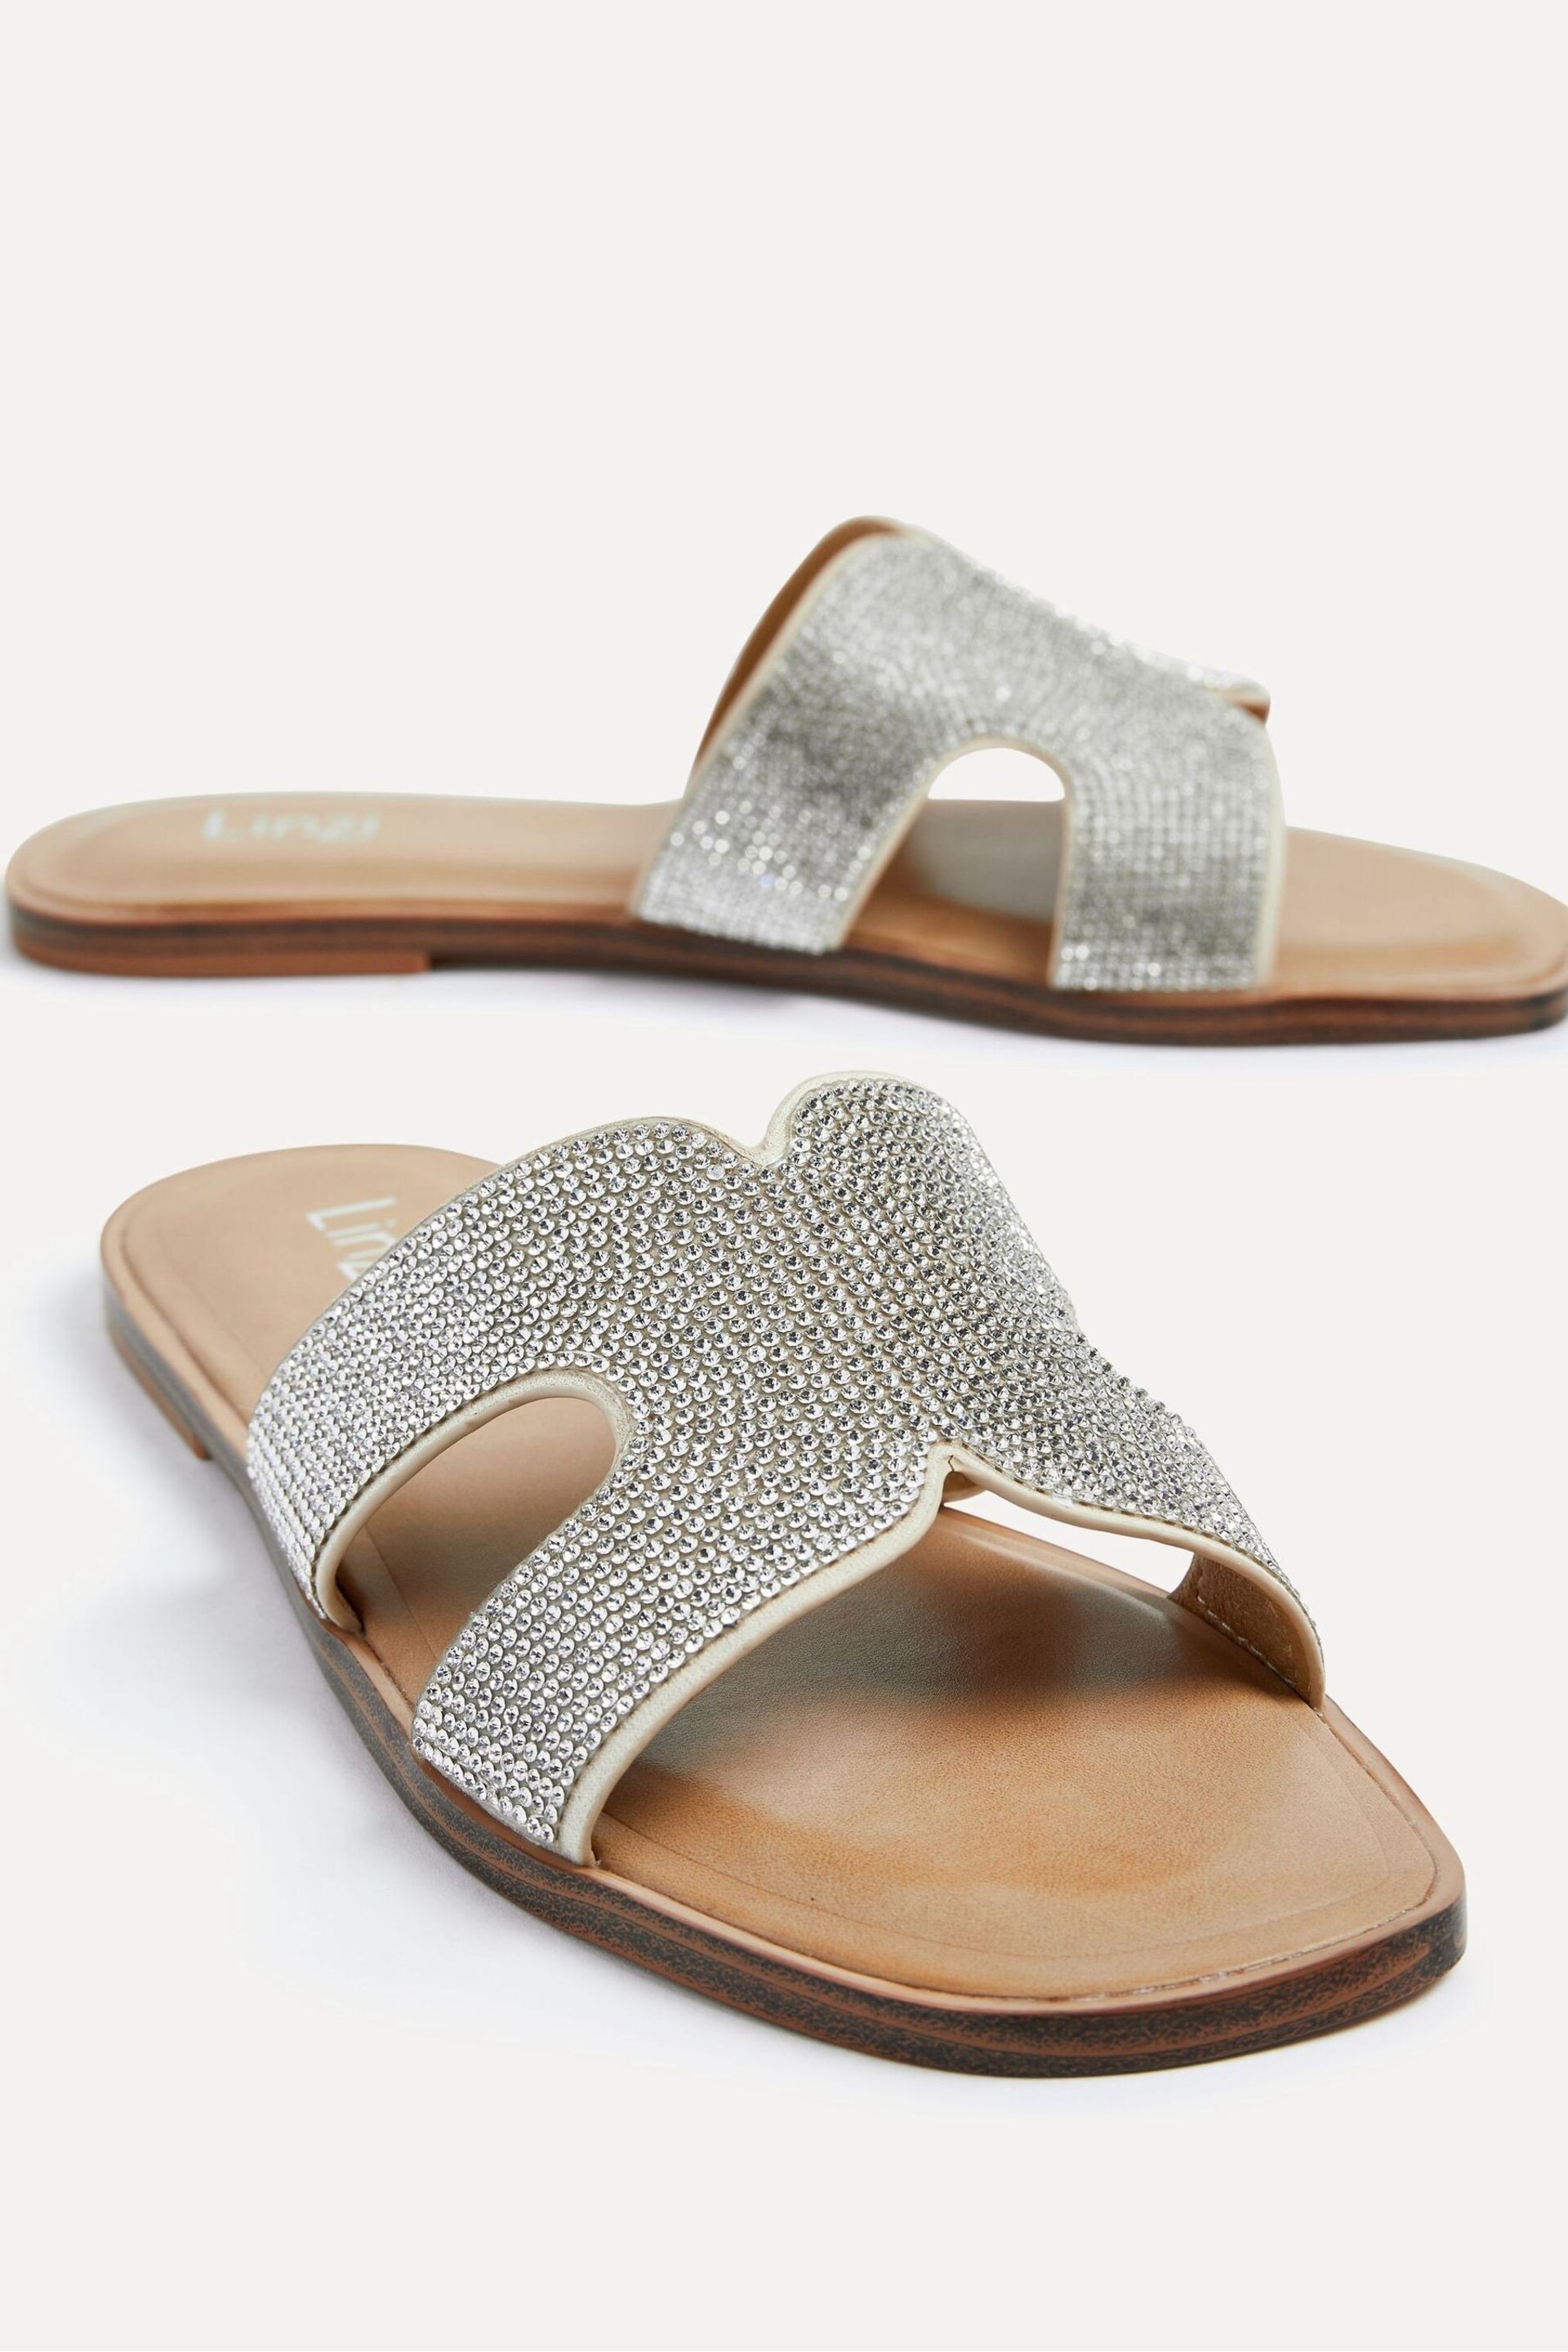 Linzi Silver Becca Diamante Embellished Flat Sandals - Image 6 of 6